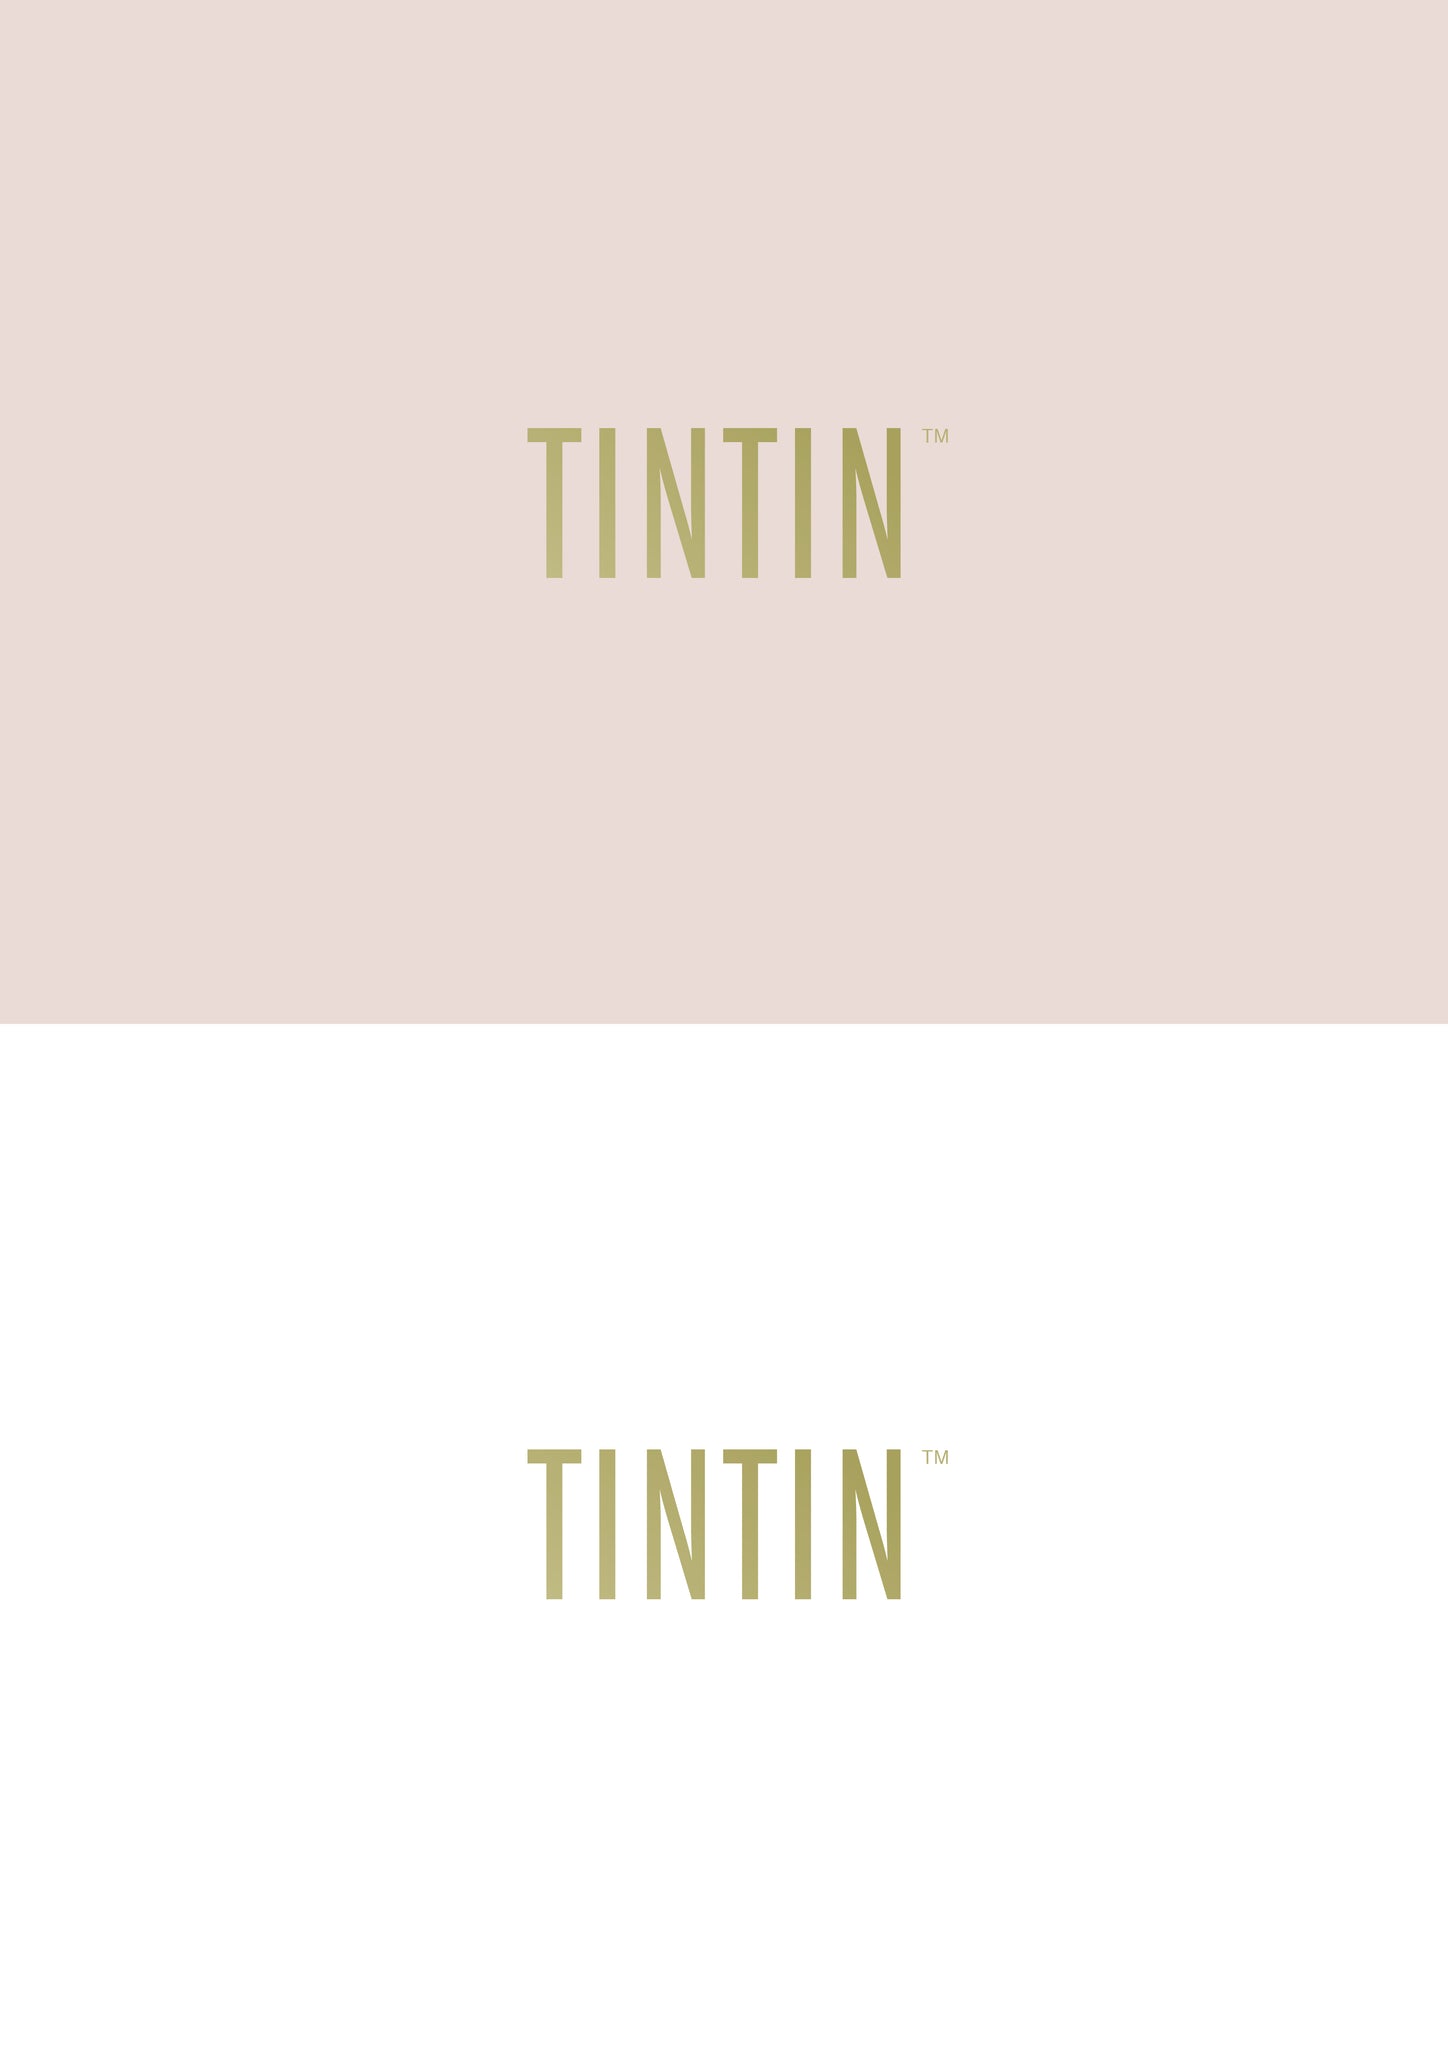 TINTIN Logo design 